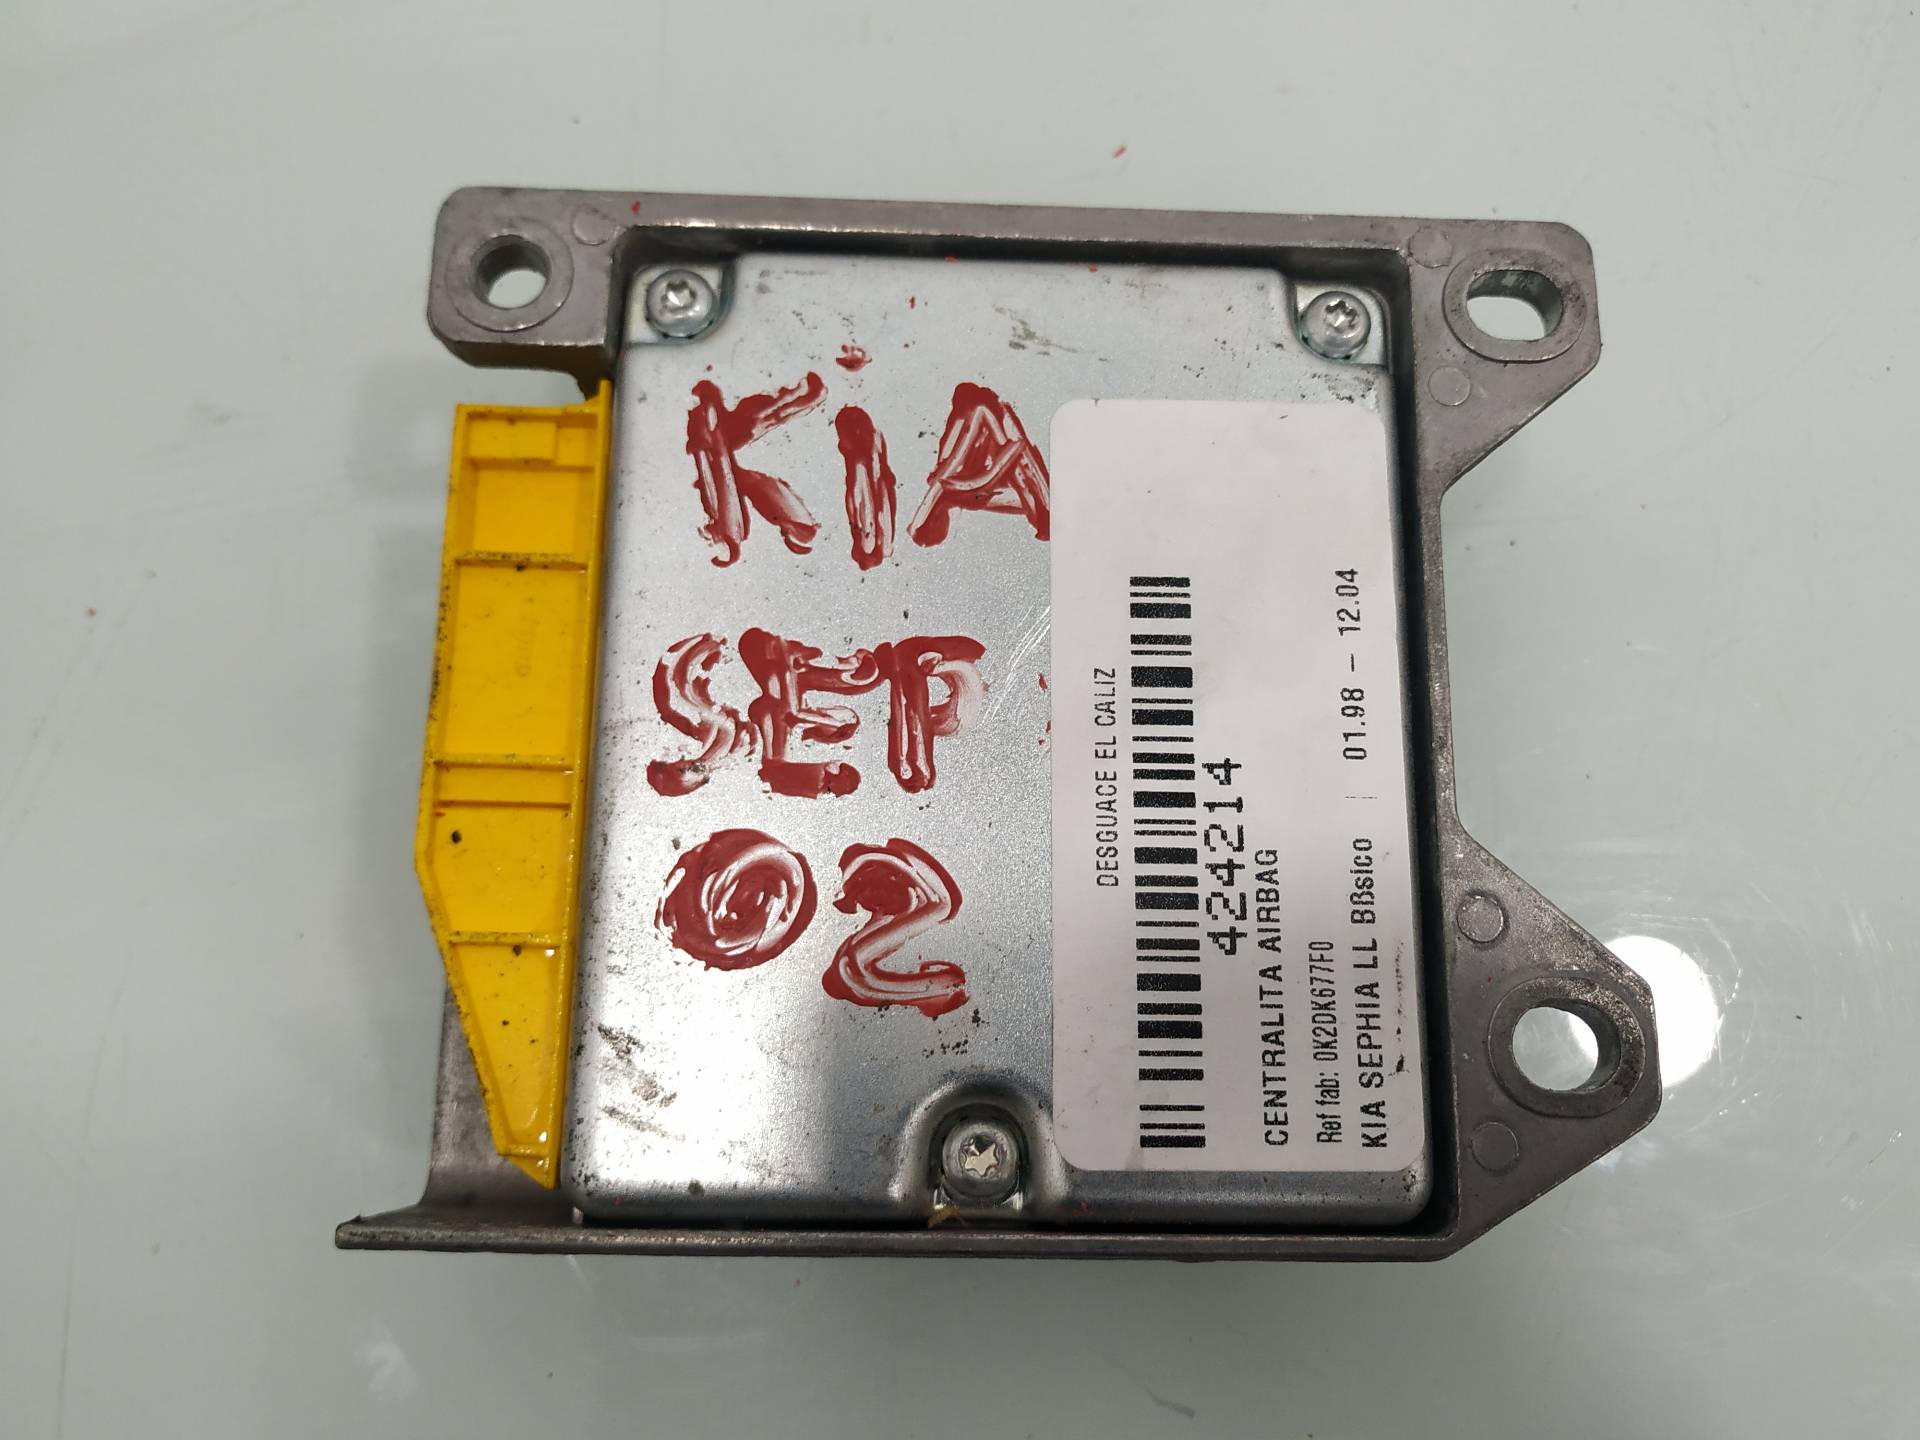 KIA Sephia 1 generation (1992-1998) SRS kontrollenhet 0K2DK677F0 24911412